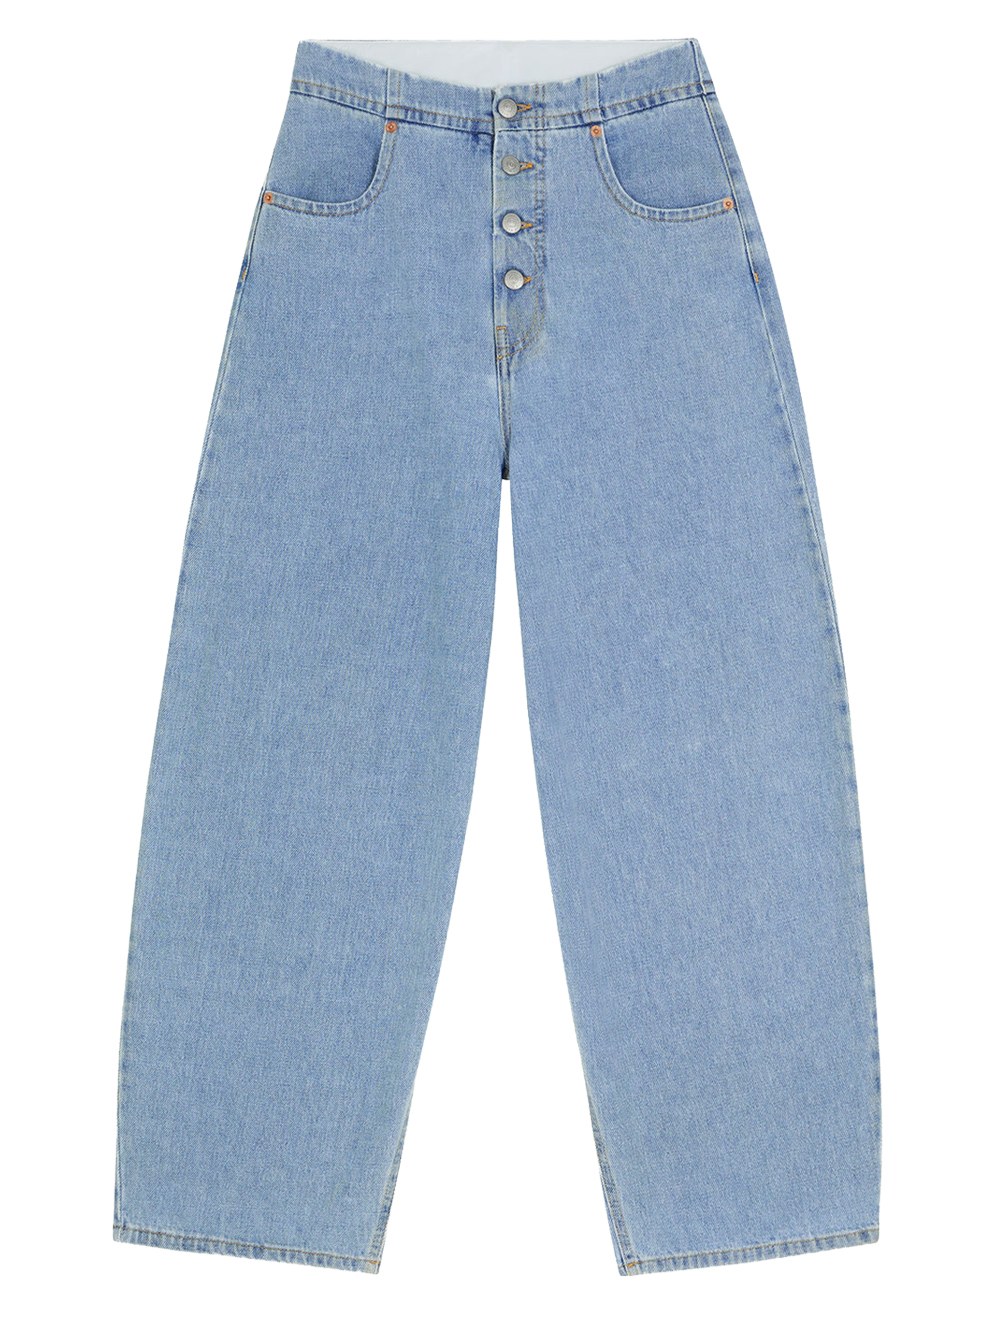 MM6 Maison Margiela Mid Rise Cropped Jeans (Size: 28)